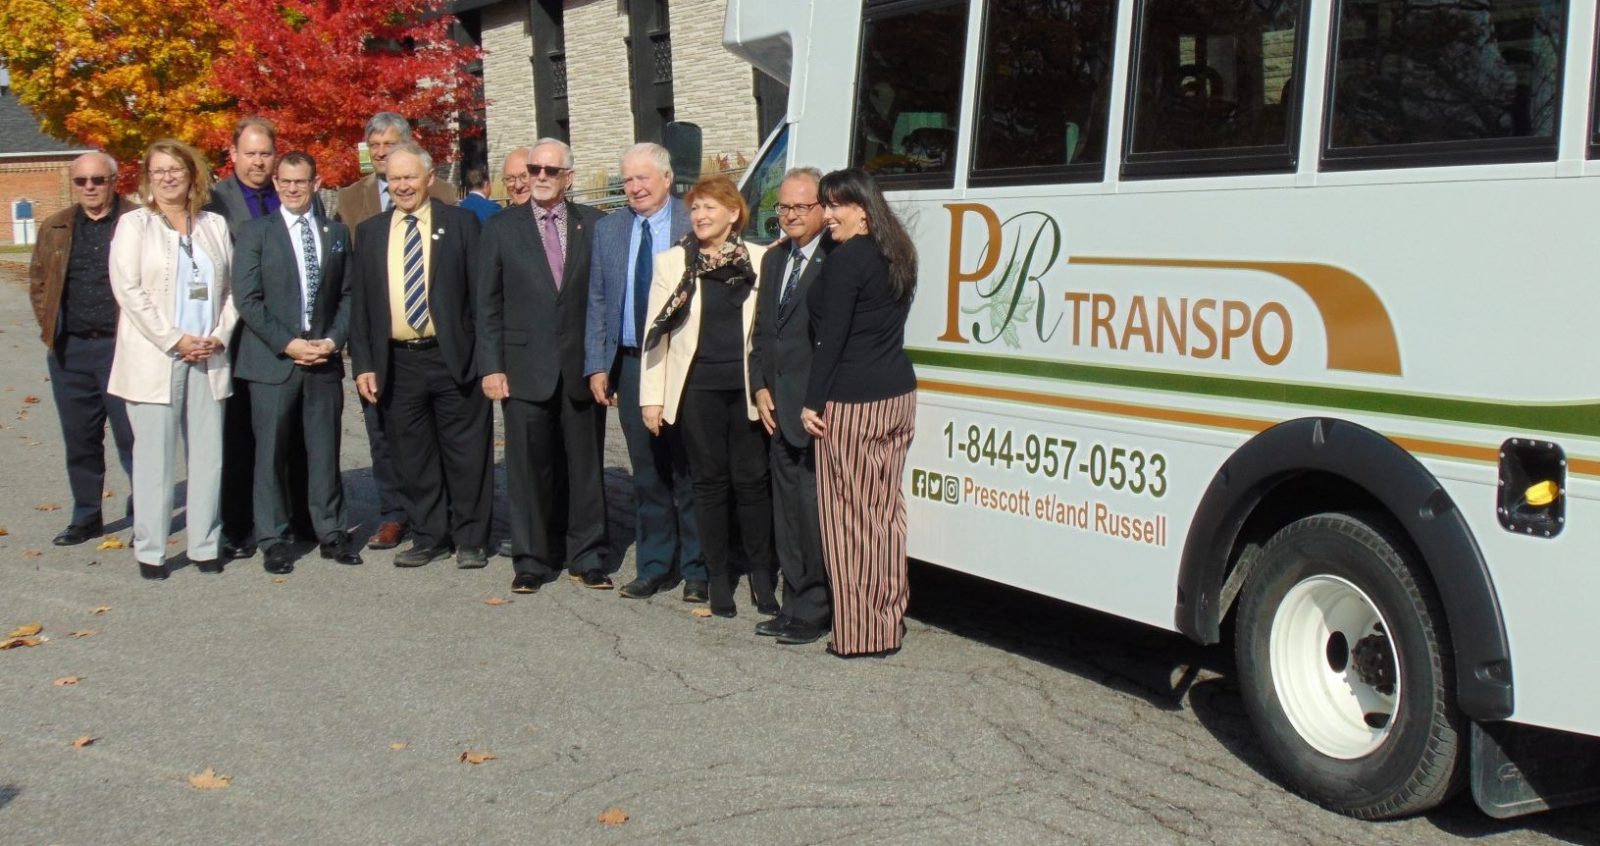 Free bus rides on the PR Transpo bus